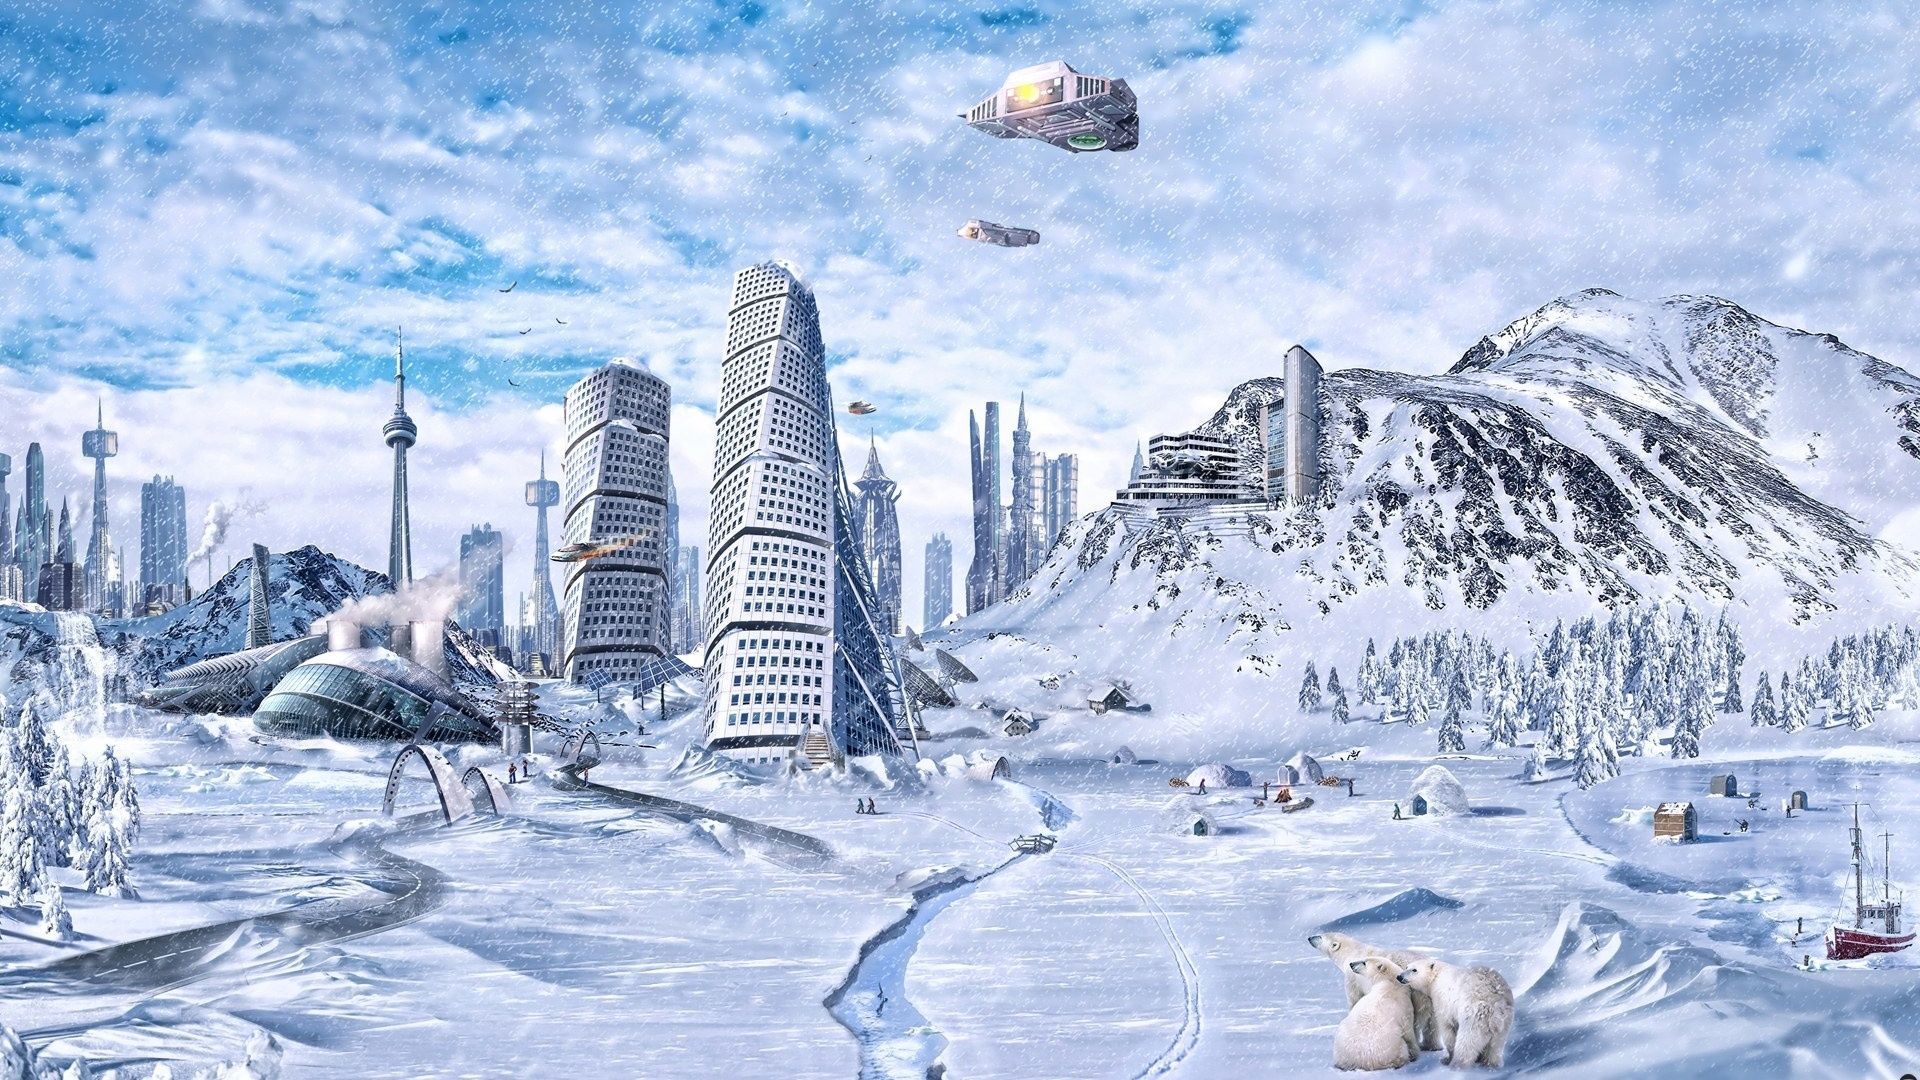 Sci Fi City In Winter